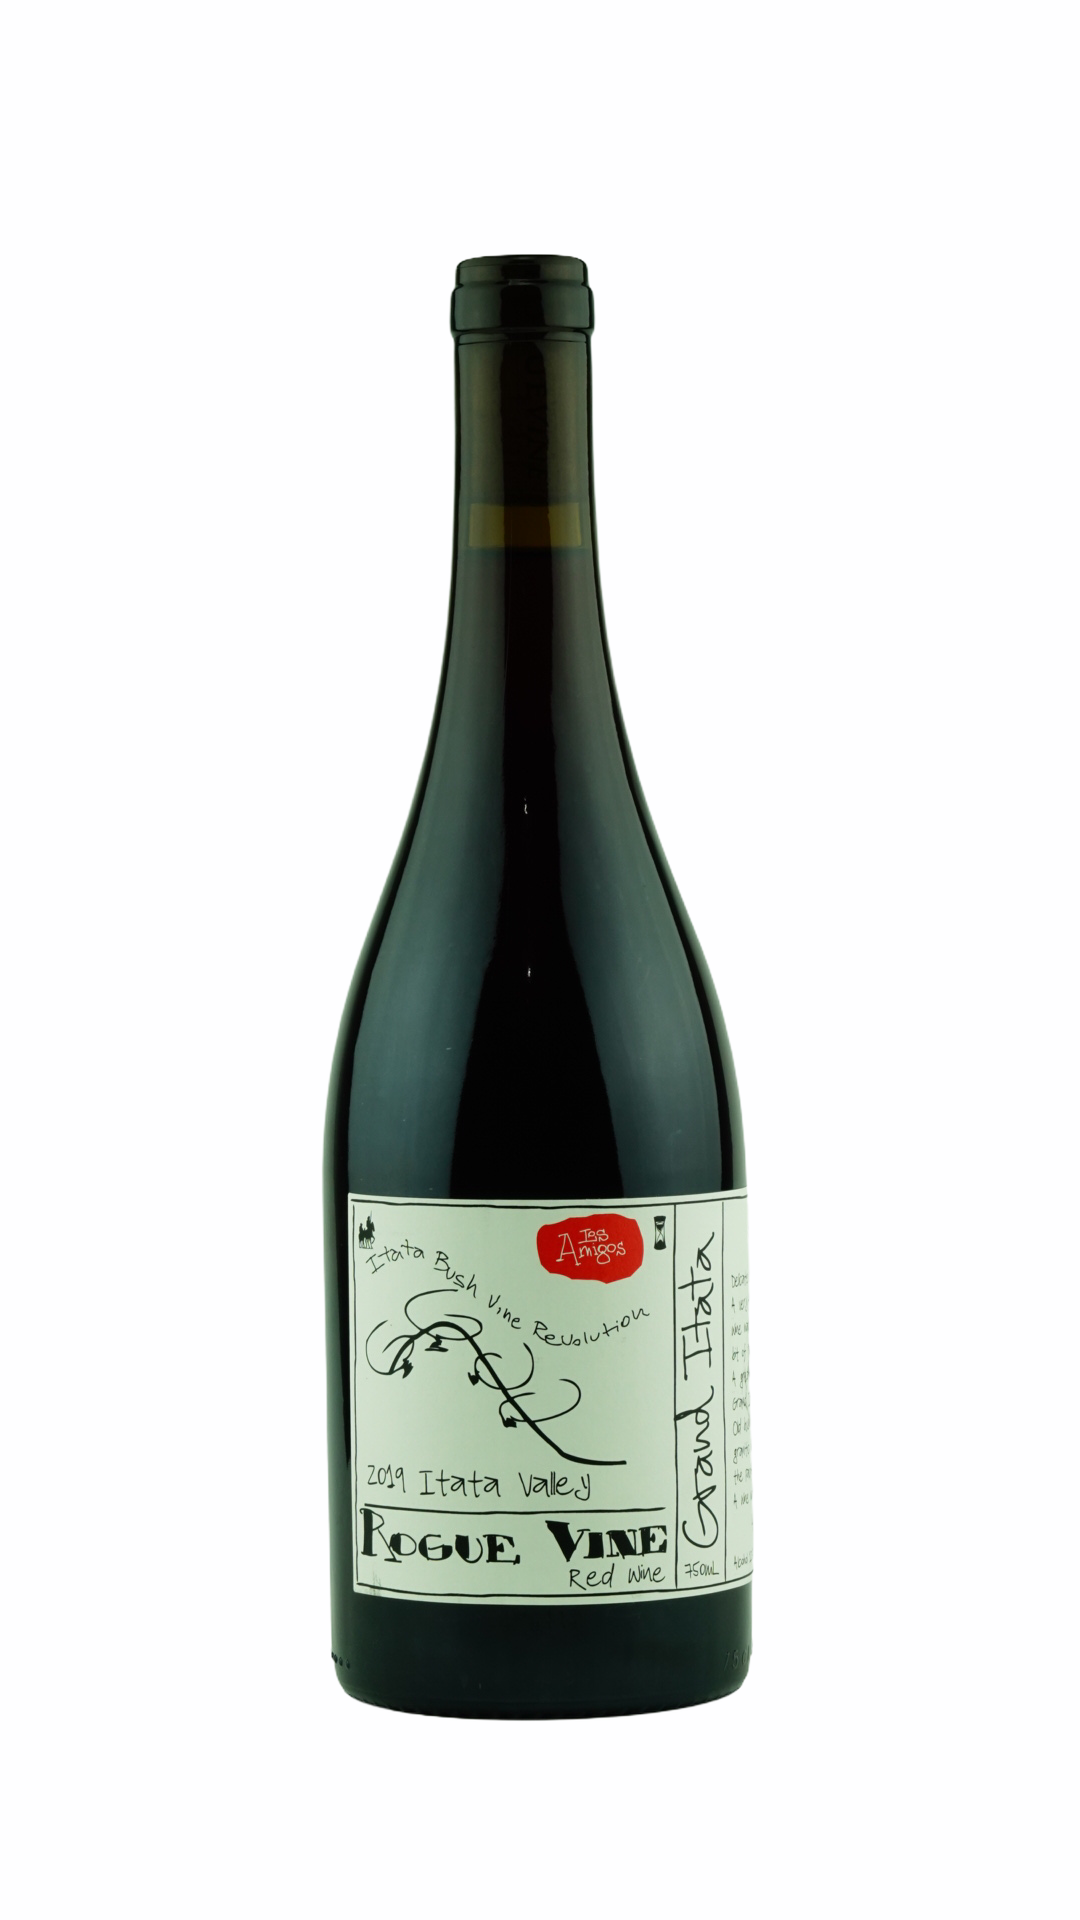 Rogue Vine - Itata Valley Red Wine 2020 (750ml)